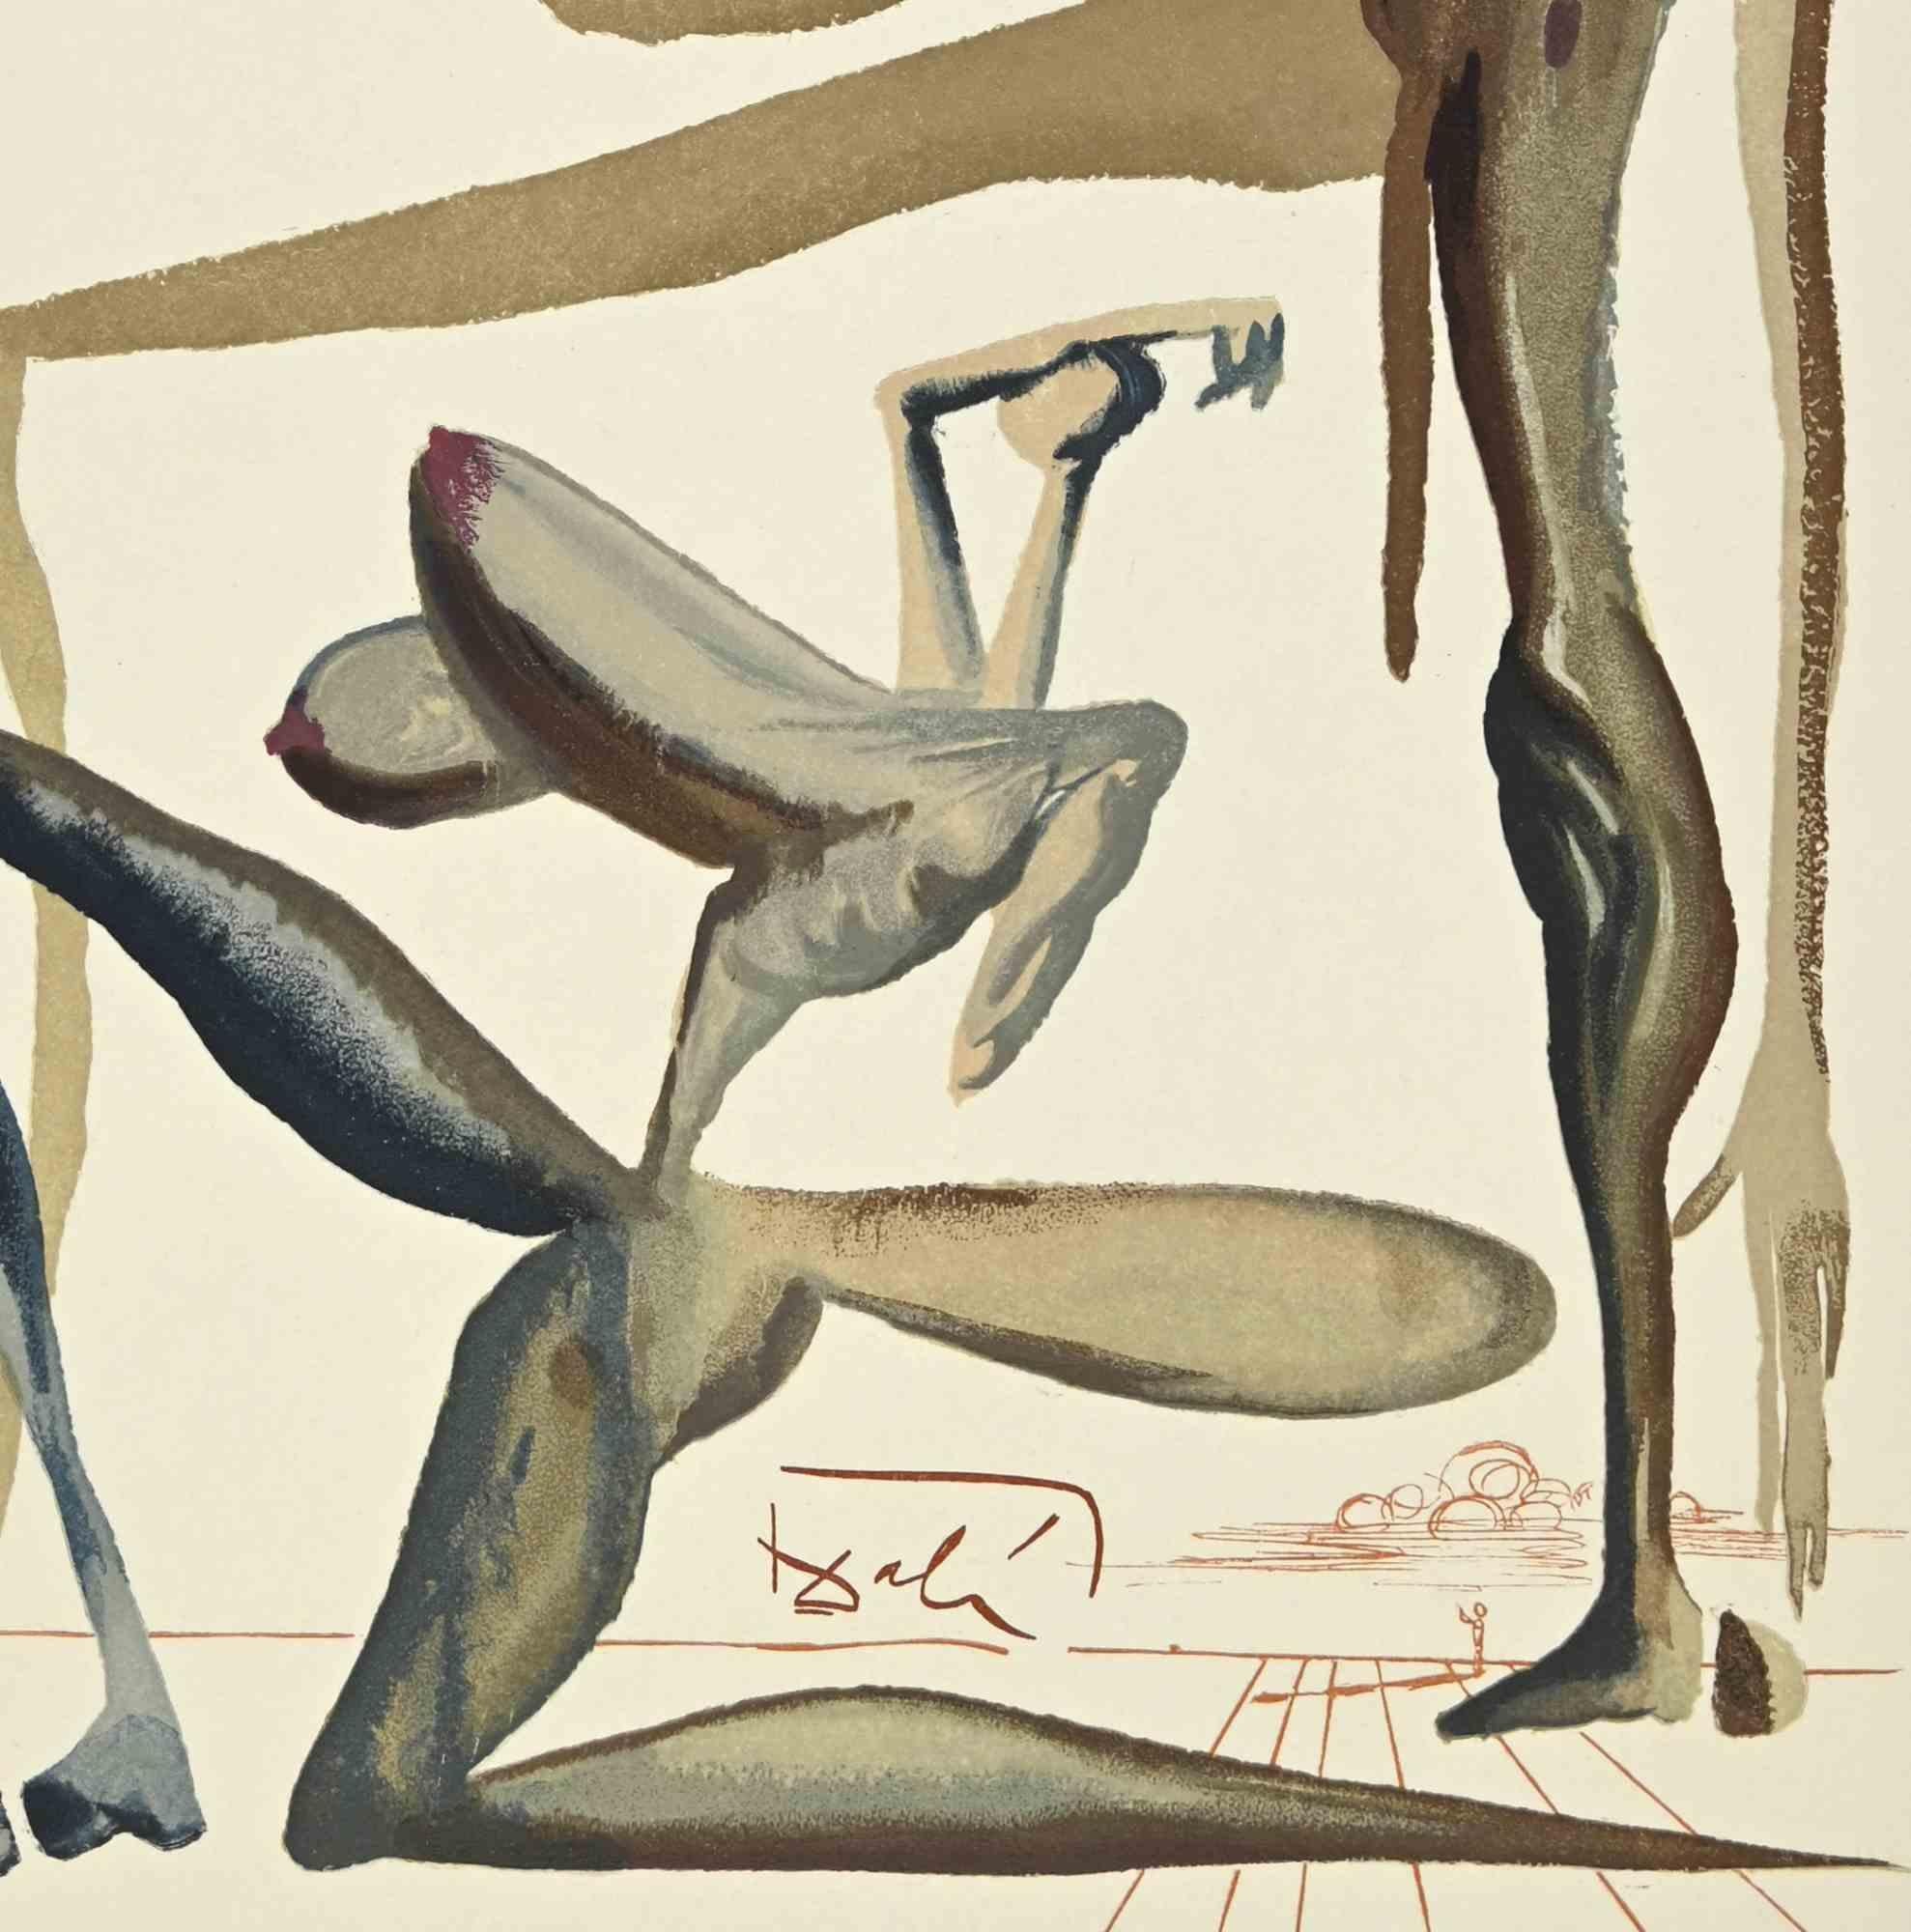 The Lavishness - Woodcut - 1963 - Print by Salvador Dalí